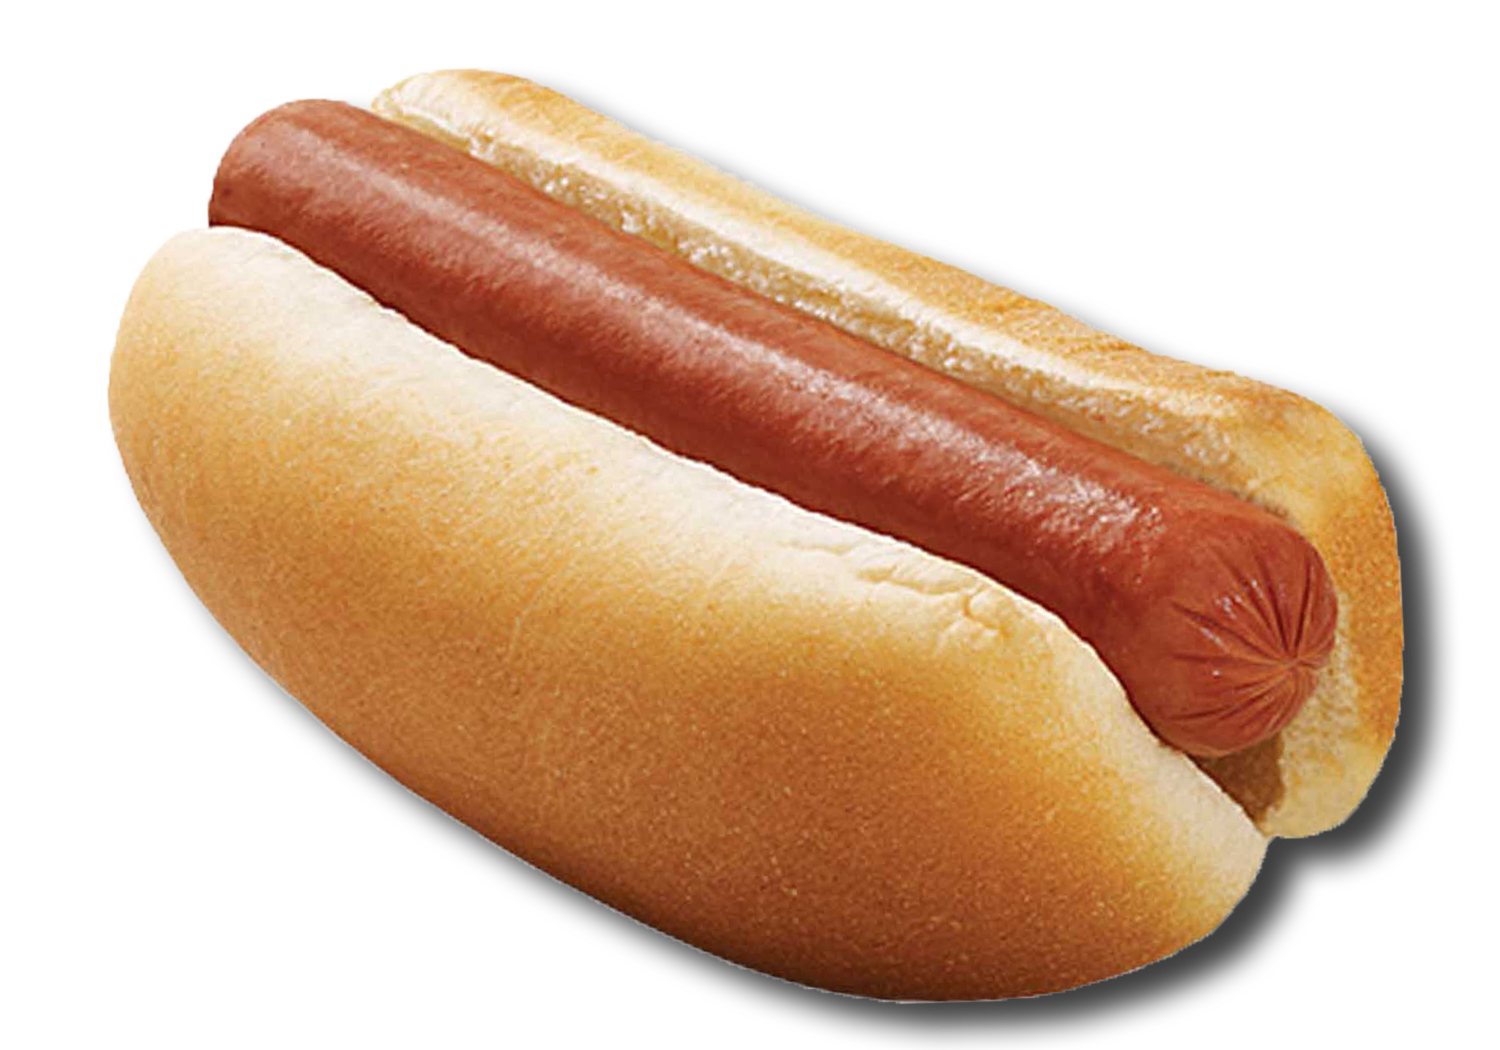 Sabrett recalls over 7 million pounds of hot dogs - Gill & Chamas, LLC